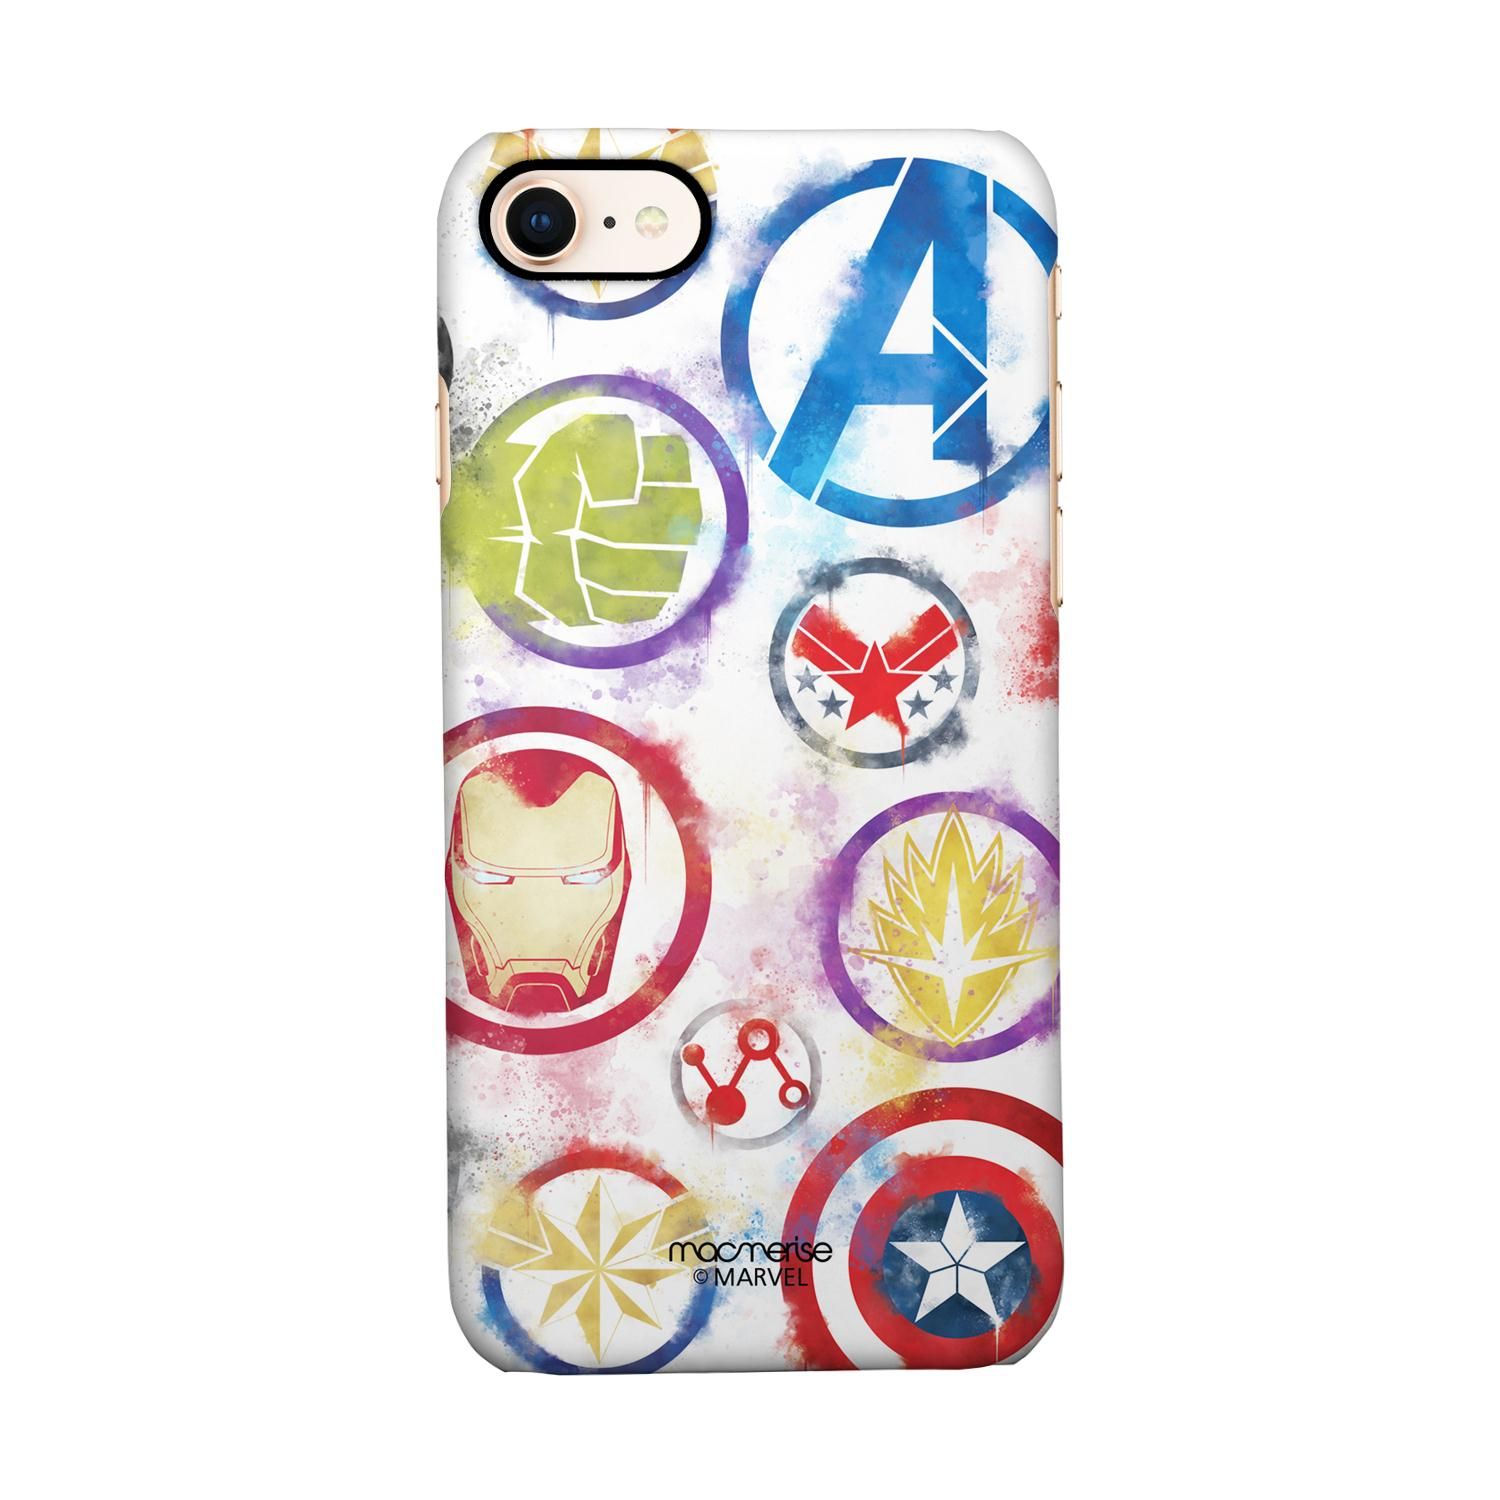 Buy Avengers Icons Graffiti - Sleek Phone Case for iPhone 7 Online